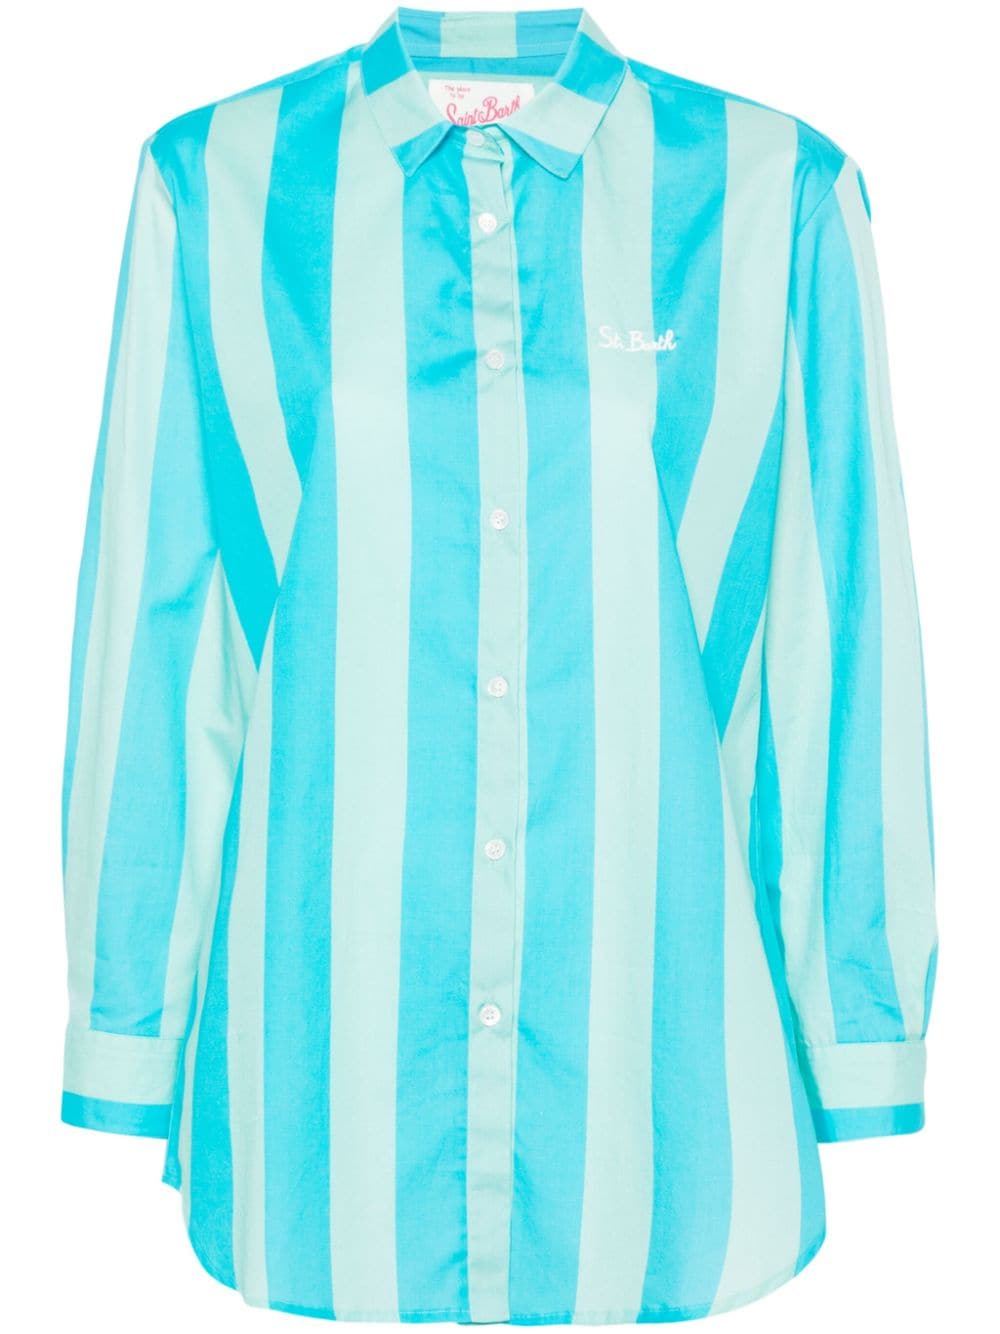 Brigitte stripe shirt